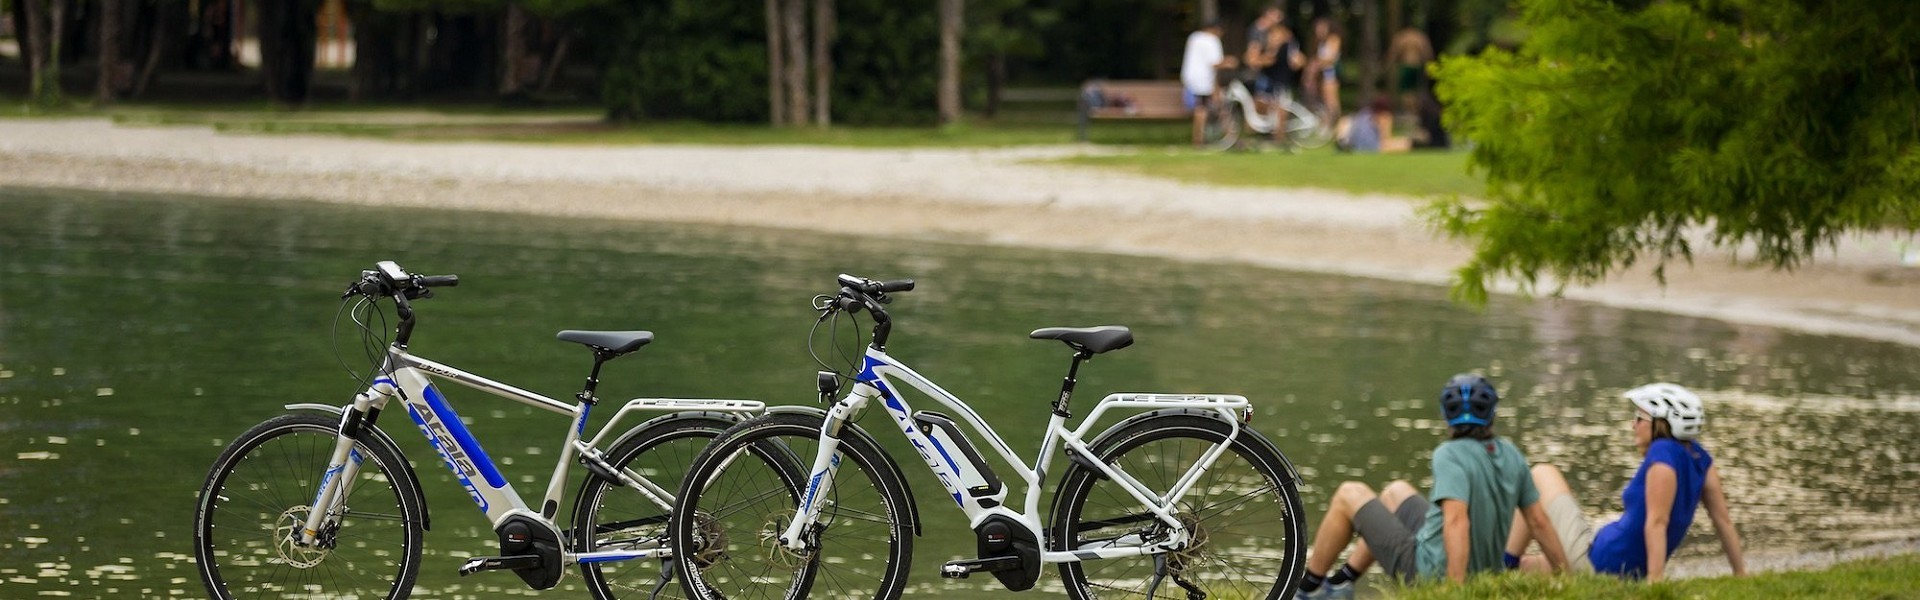 liguria cycleways and cycle routes | rent a touring bike | international bike rental